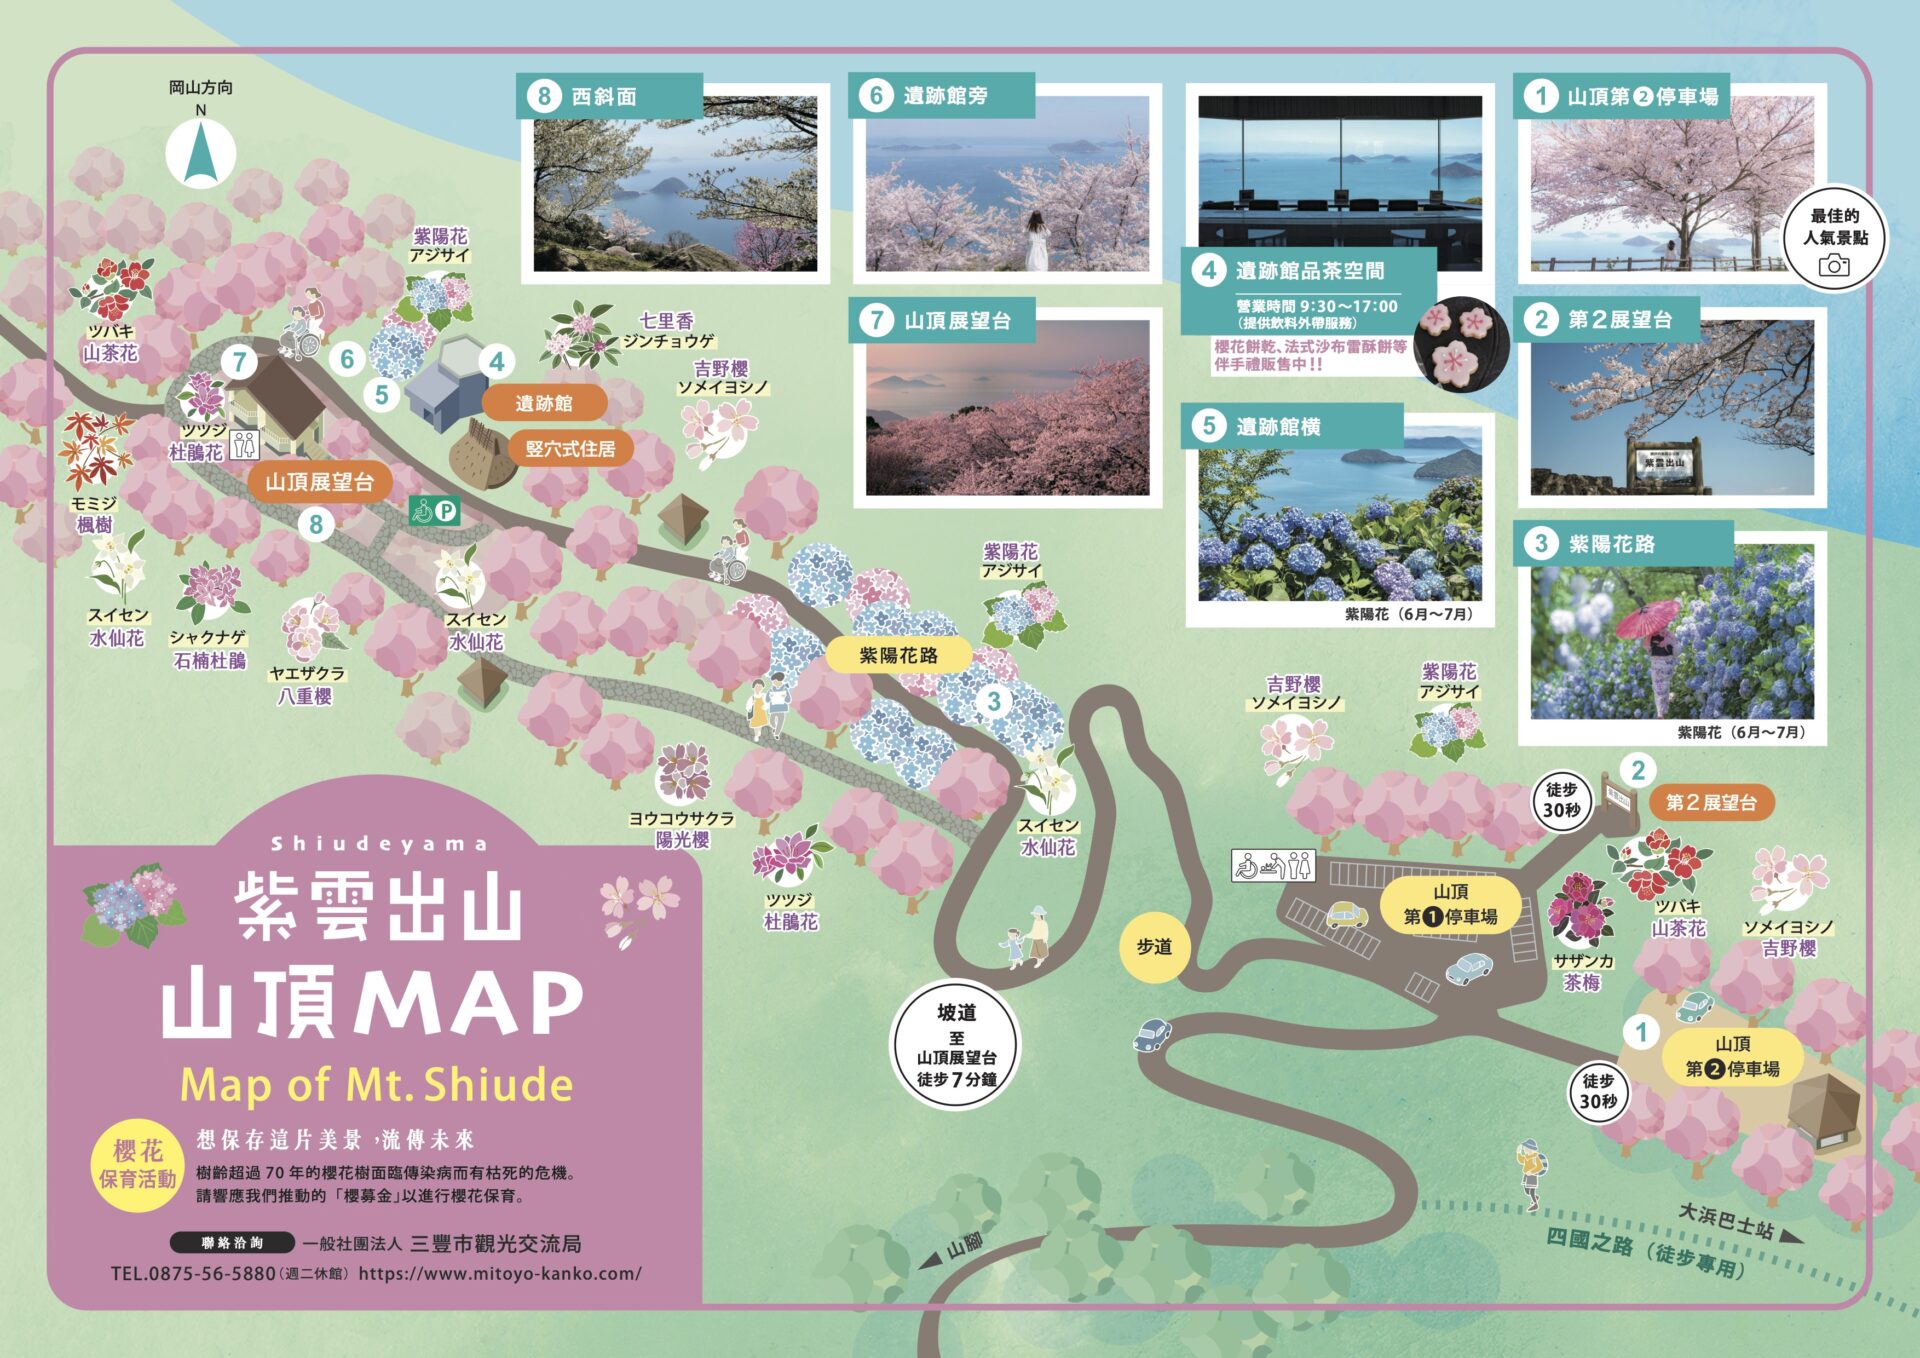 Mt. Shiude Summit Map